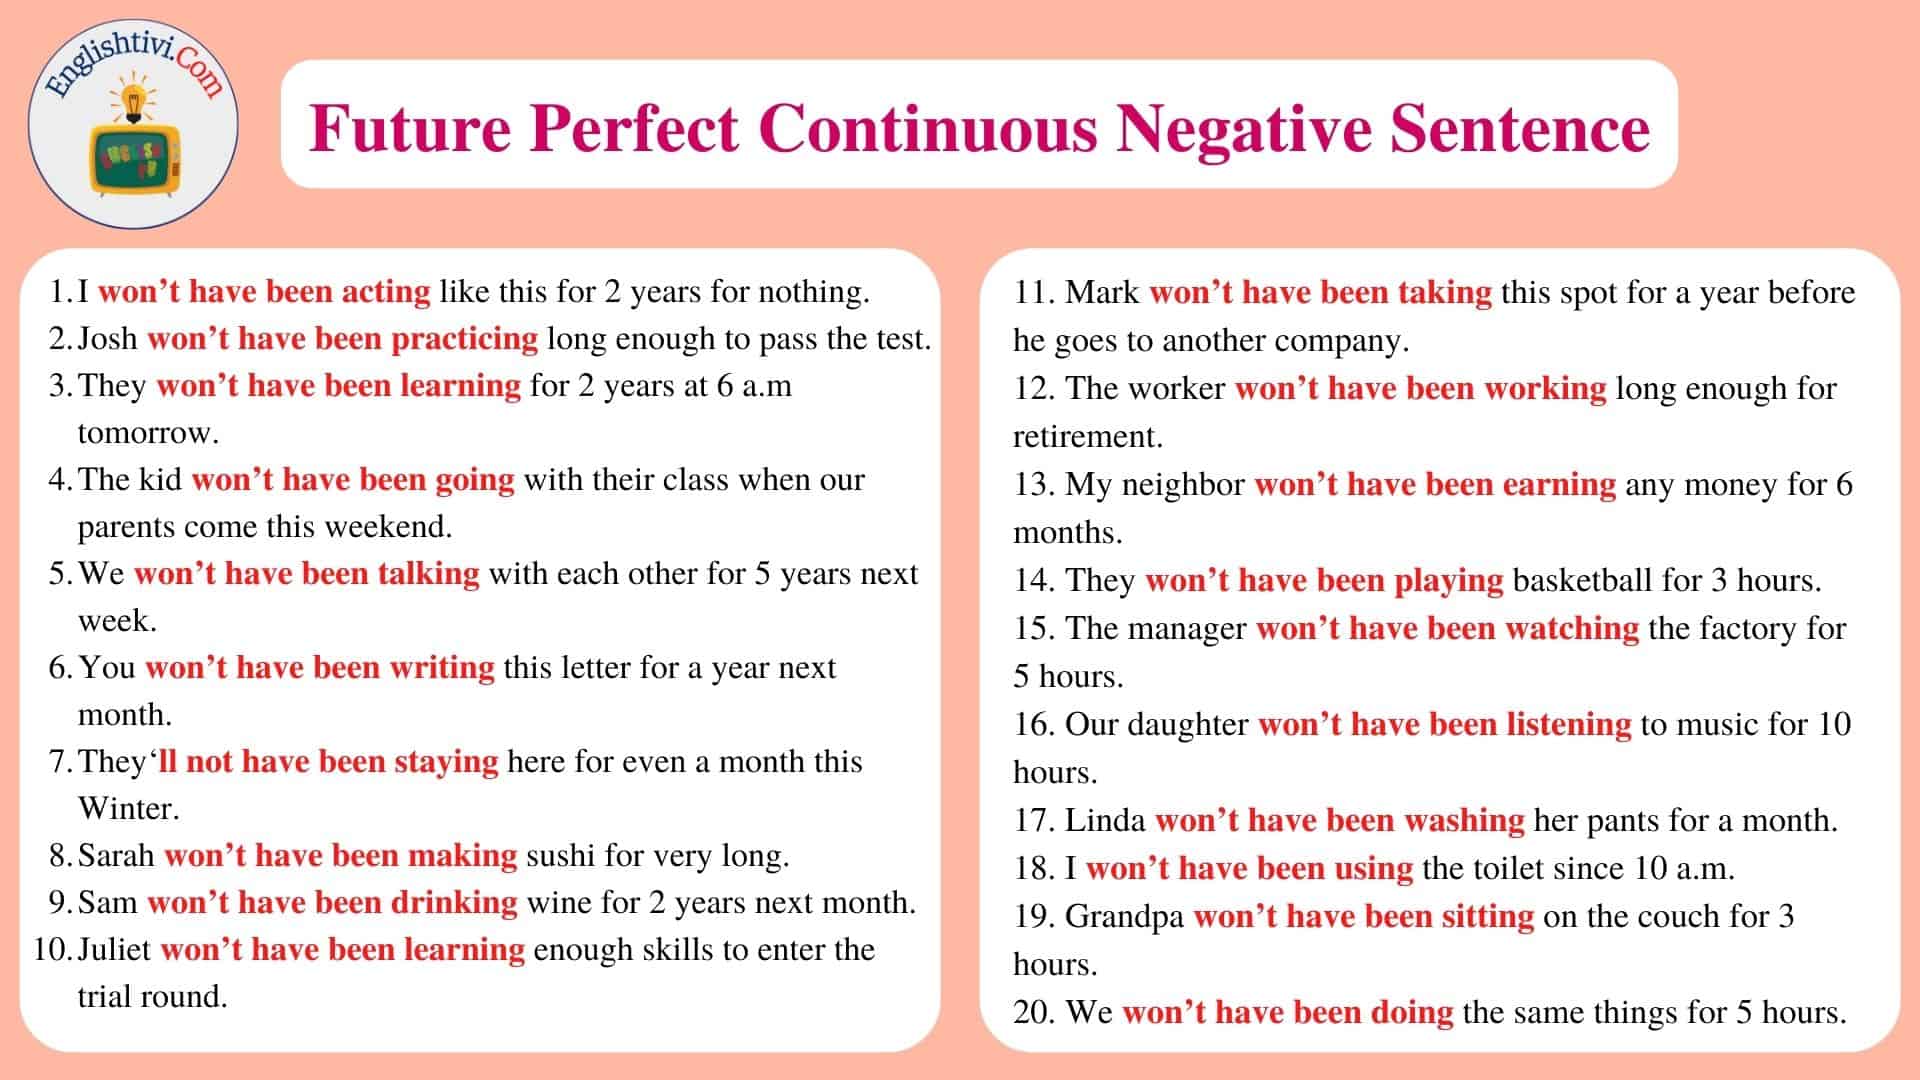 Future Perfect Continuous Negative Sentence